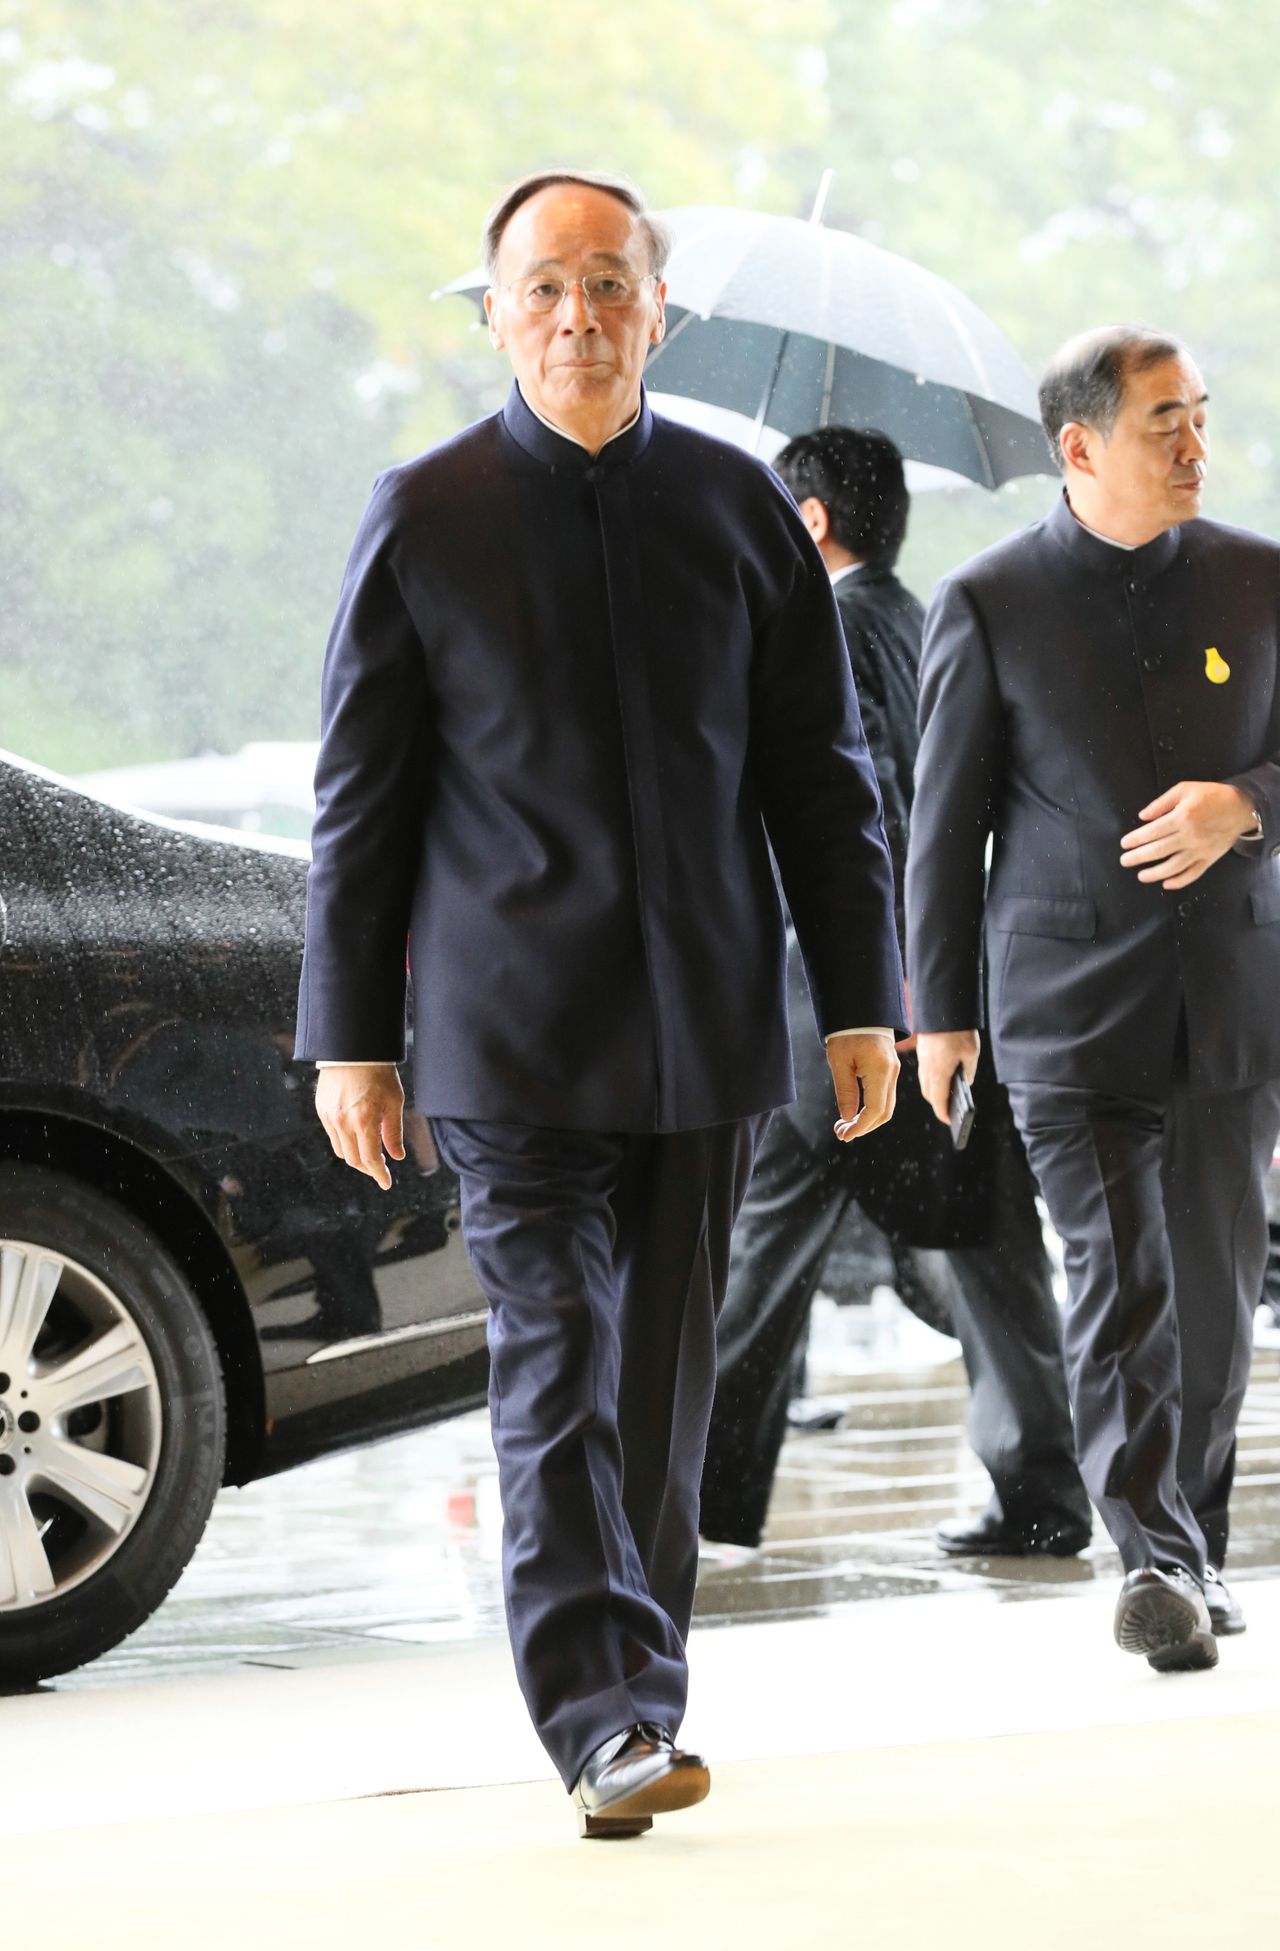 Chinese Vice President Wang Qishan is also among the guests. (© Jiji)